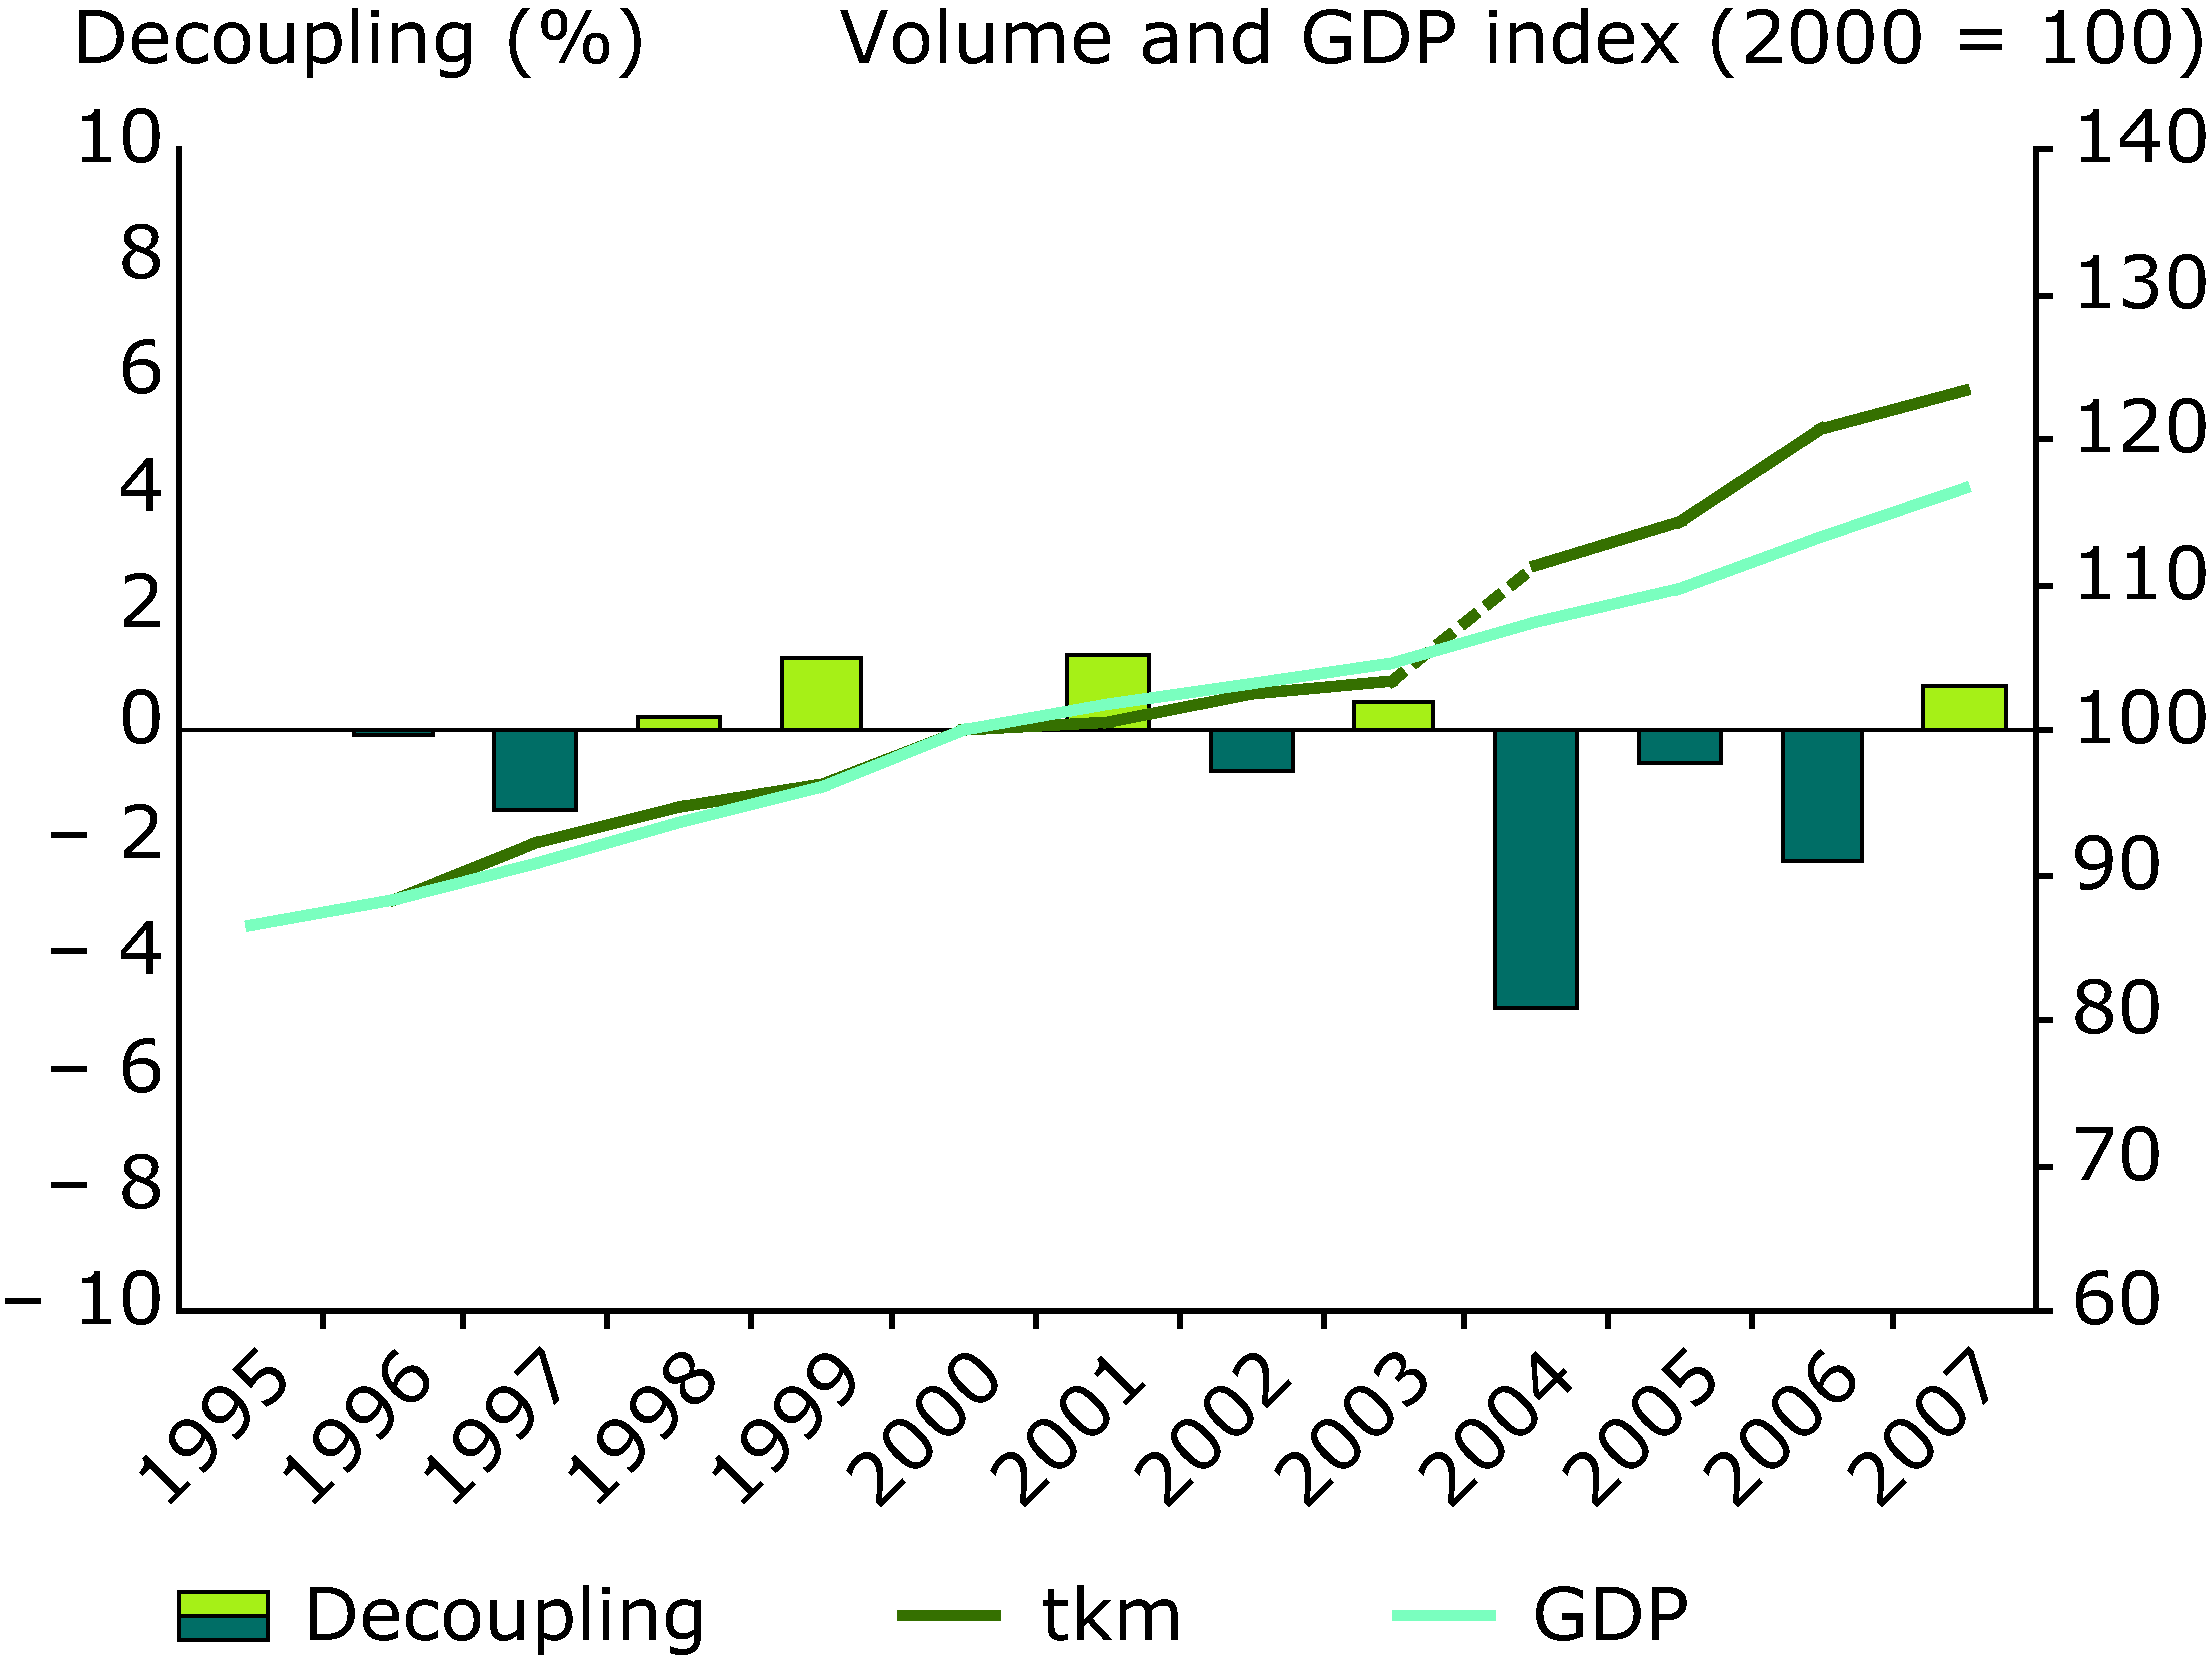 Freight transport volumes grow alongside GDP